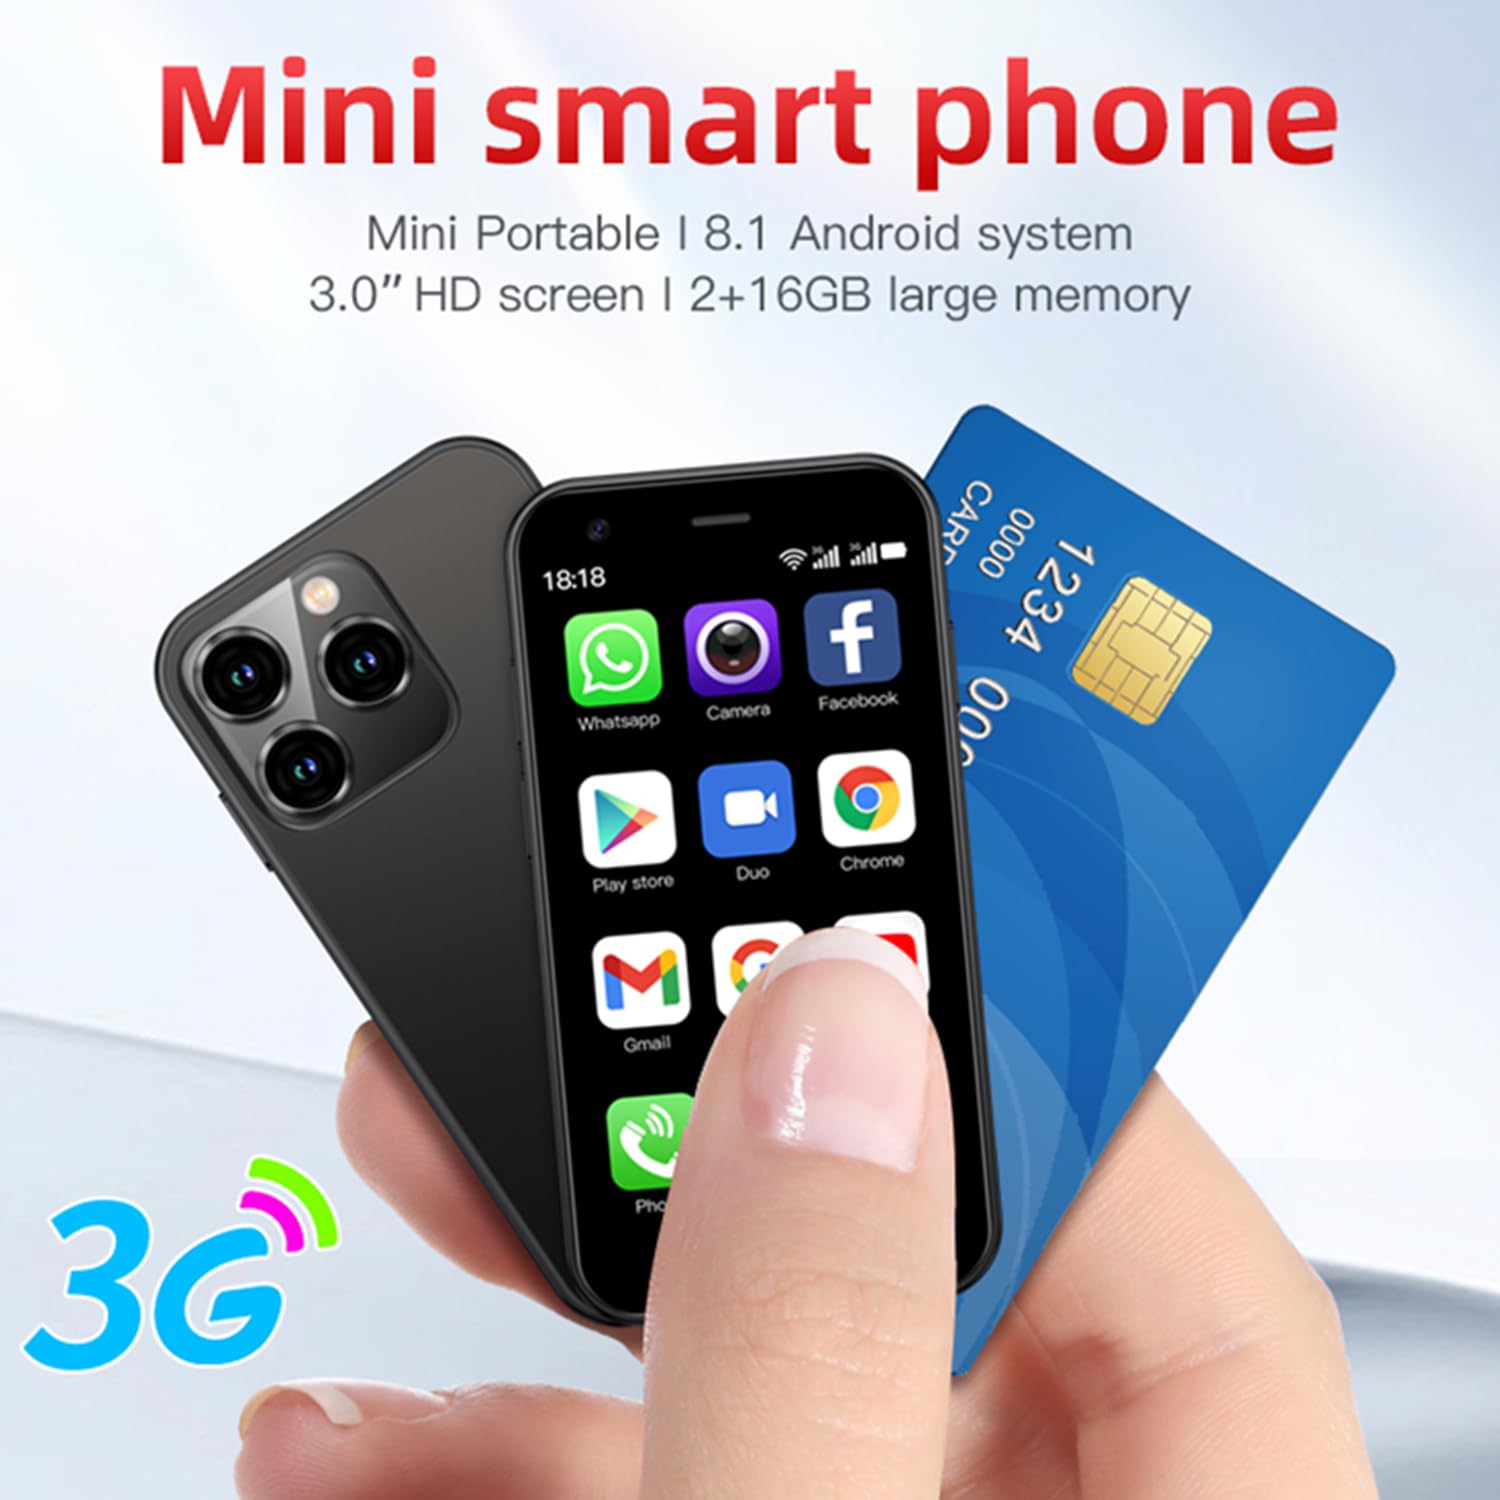 SOYES XS15 3G Mini Smartphone 3.0 Inch WiFi GPS Quad Core Android 8.1 Cell Phones Slim Body HD Camera Dual Sim Google Play Cute Palm Smartphone 2GB RAM 16GB ROM China Mobile (Black)